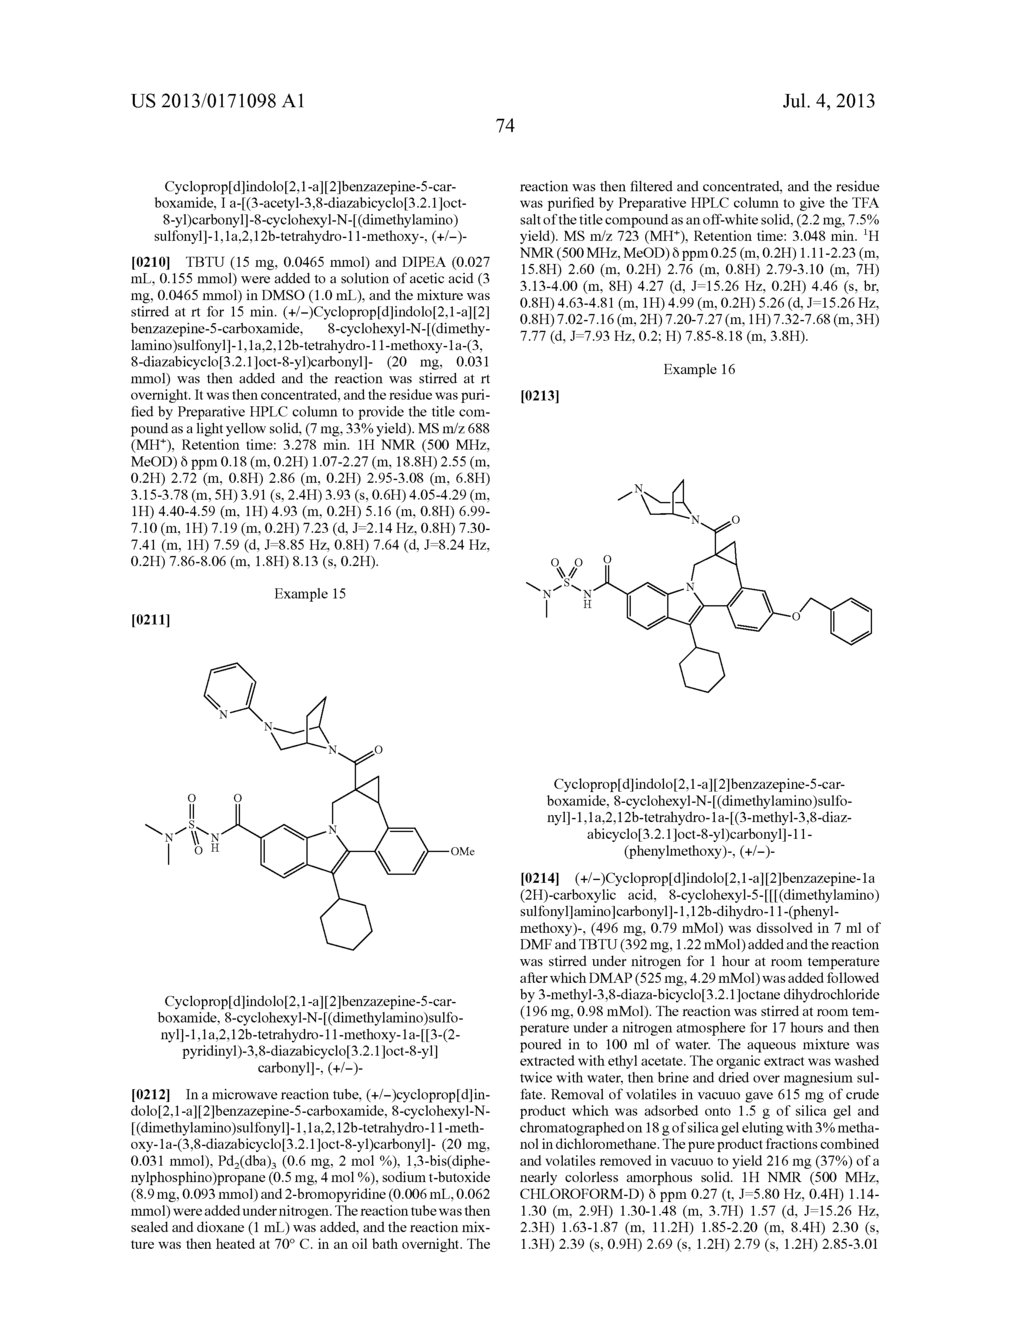 Cyclopropyl Fused Indolobenzazepine HCV NS5B Inhibitors - diagram, schematic, and image 75